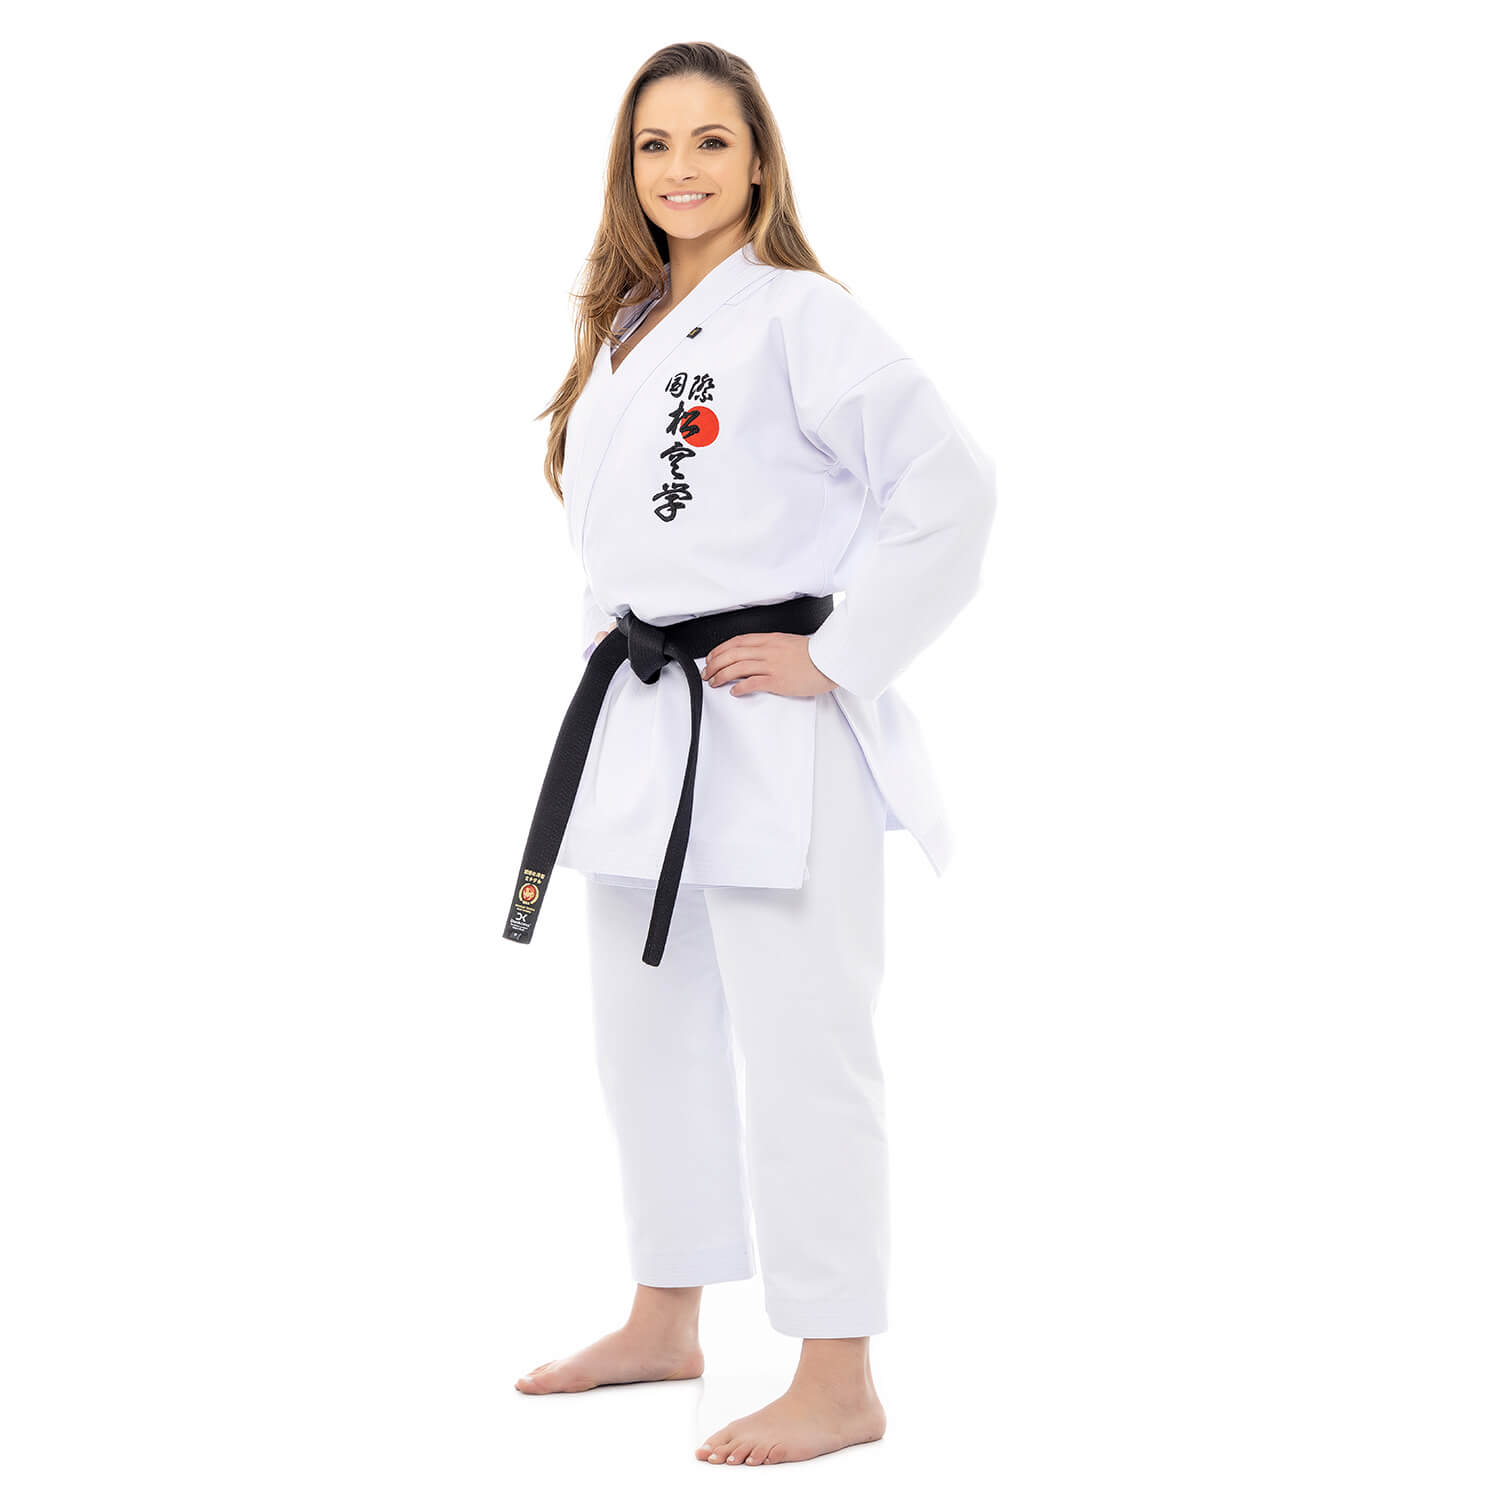 Karate-gi Premium ISKA